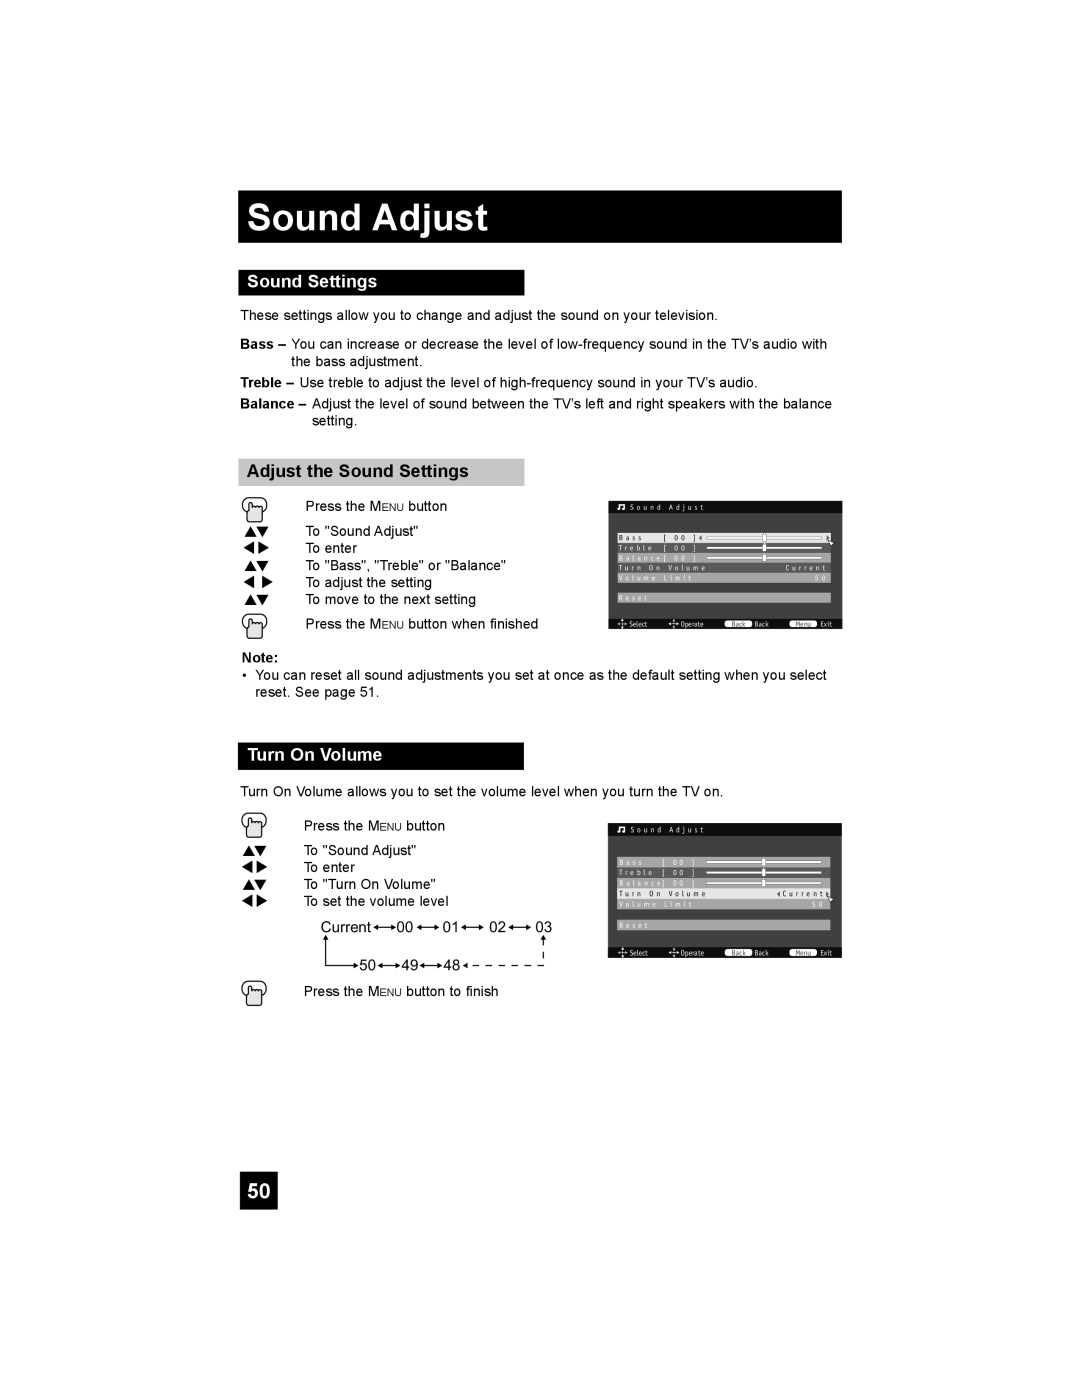 JVC LT-42X688, LT-37X688 manual Sound Adjust, Adjust the Sound Settings, Turn On Volume 